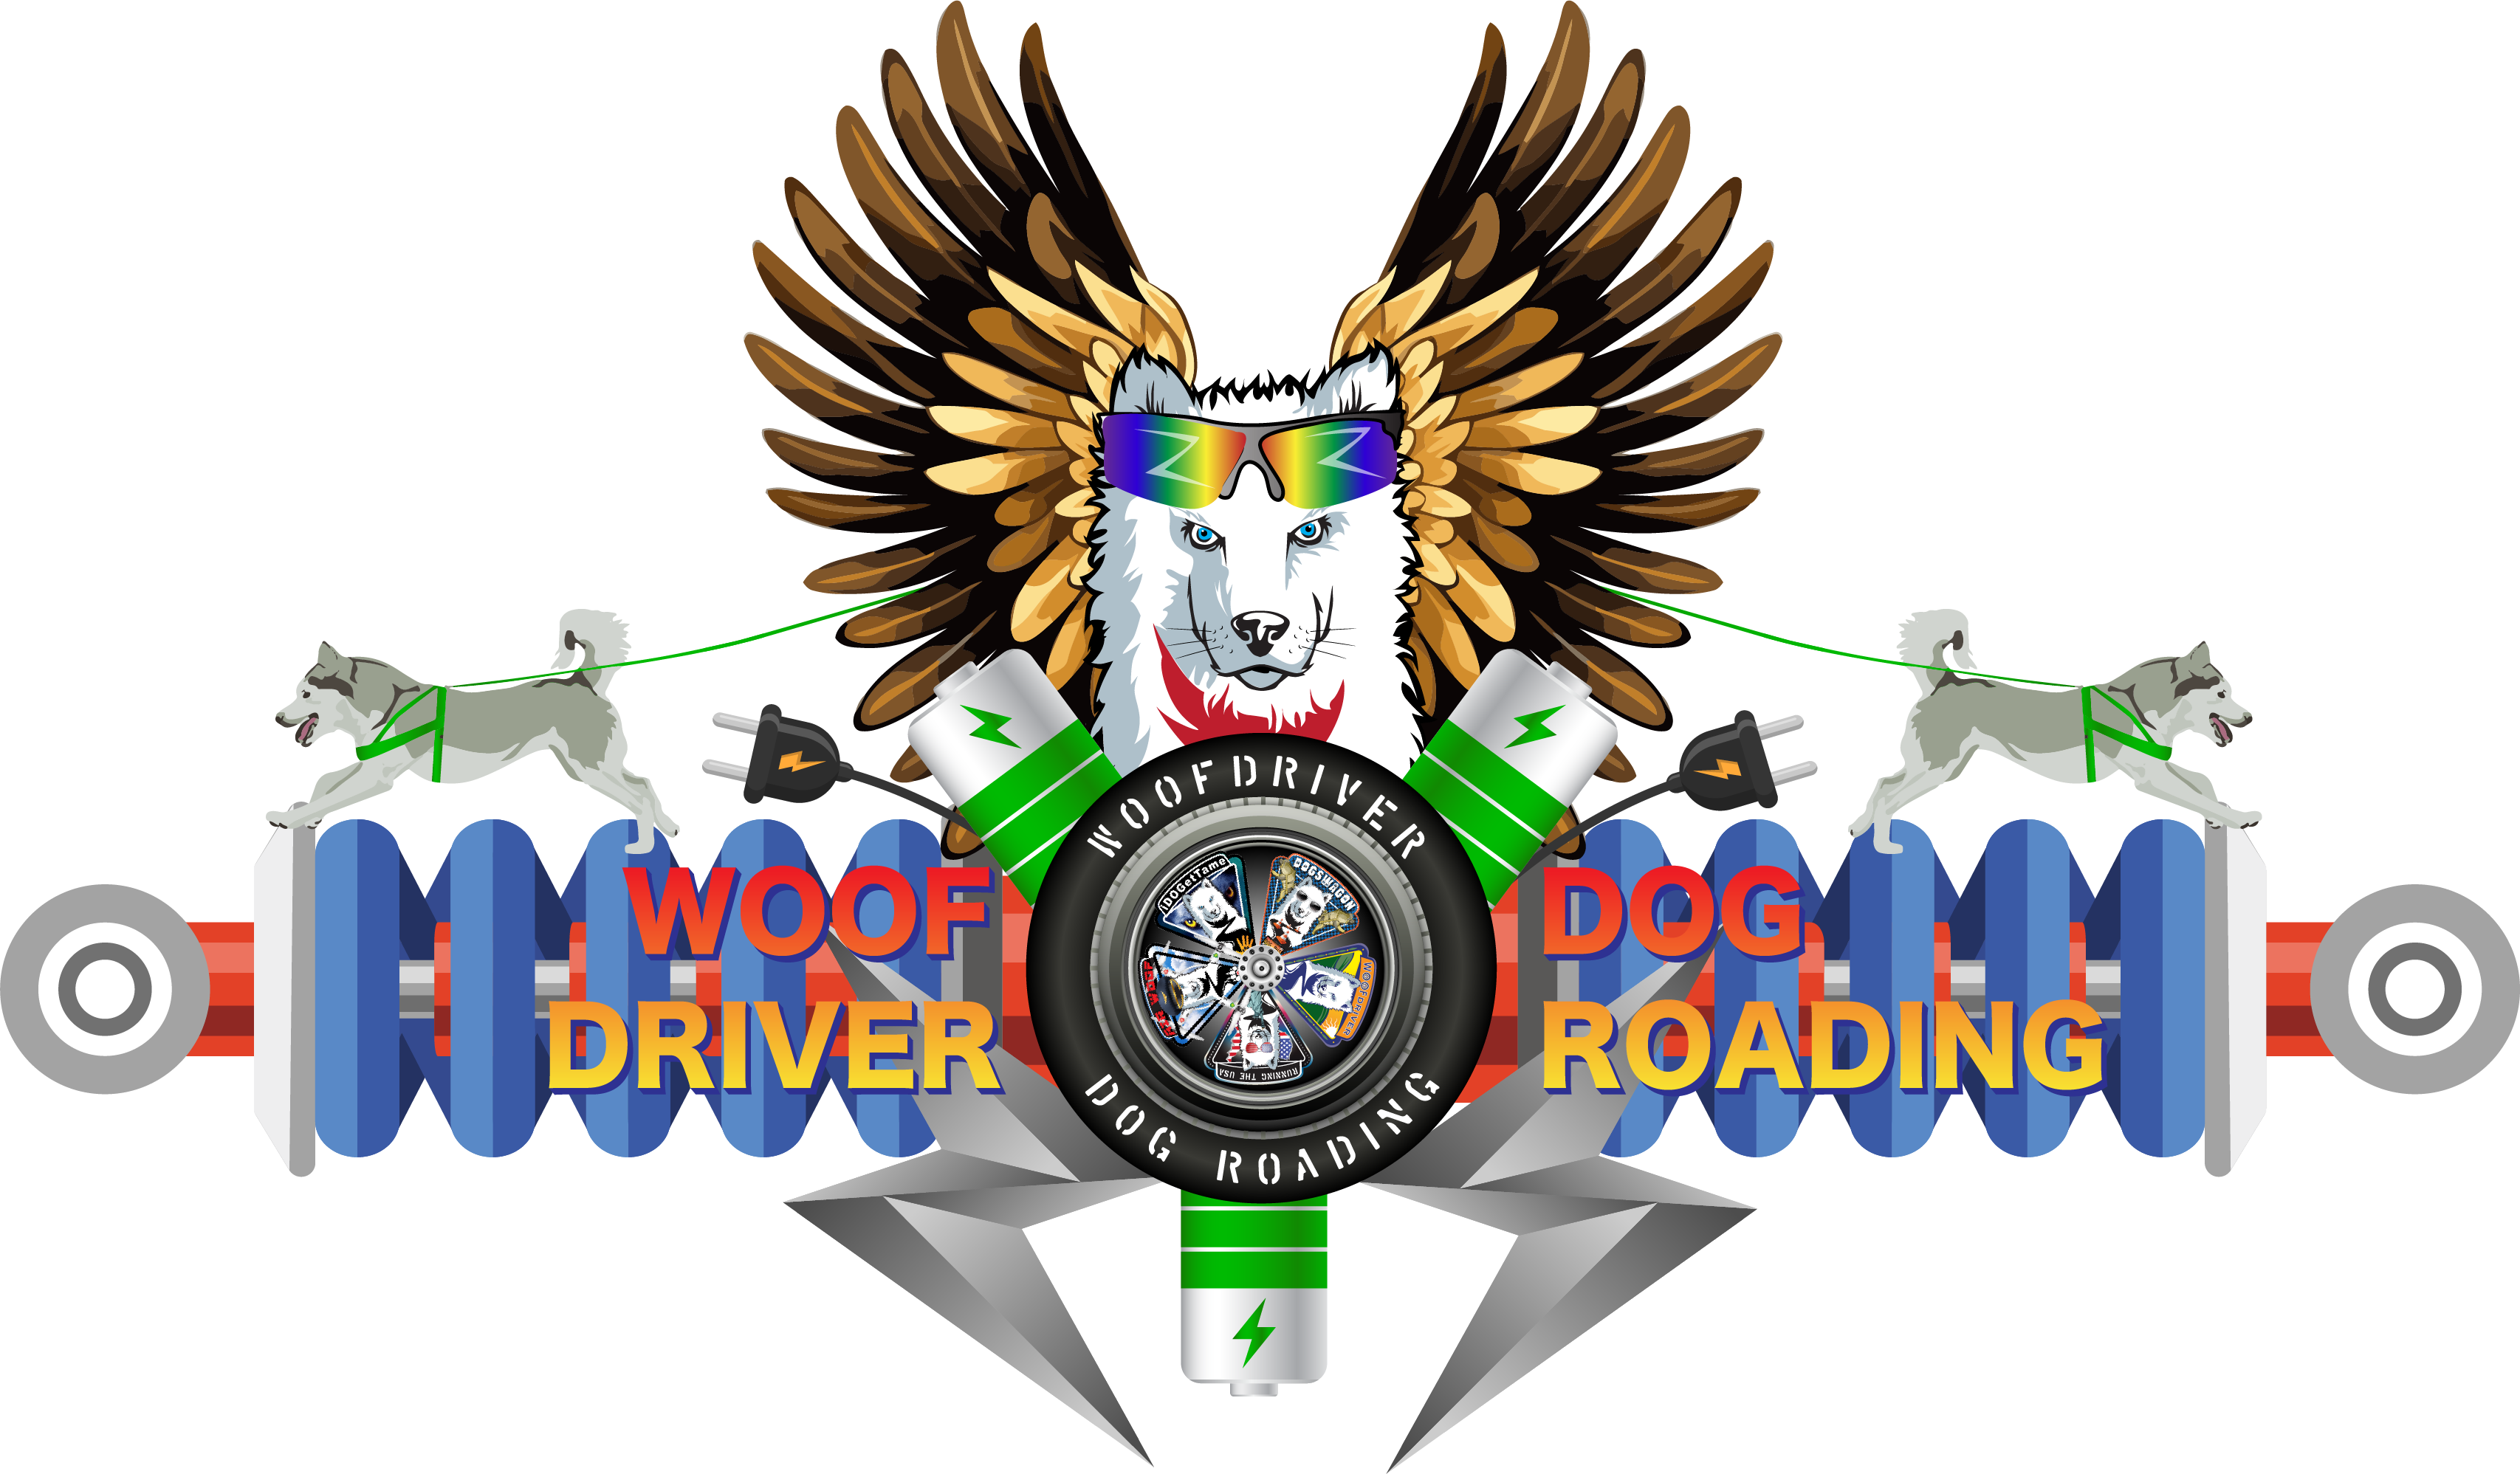 WooFDriver's Dog Roading